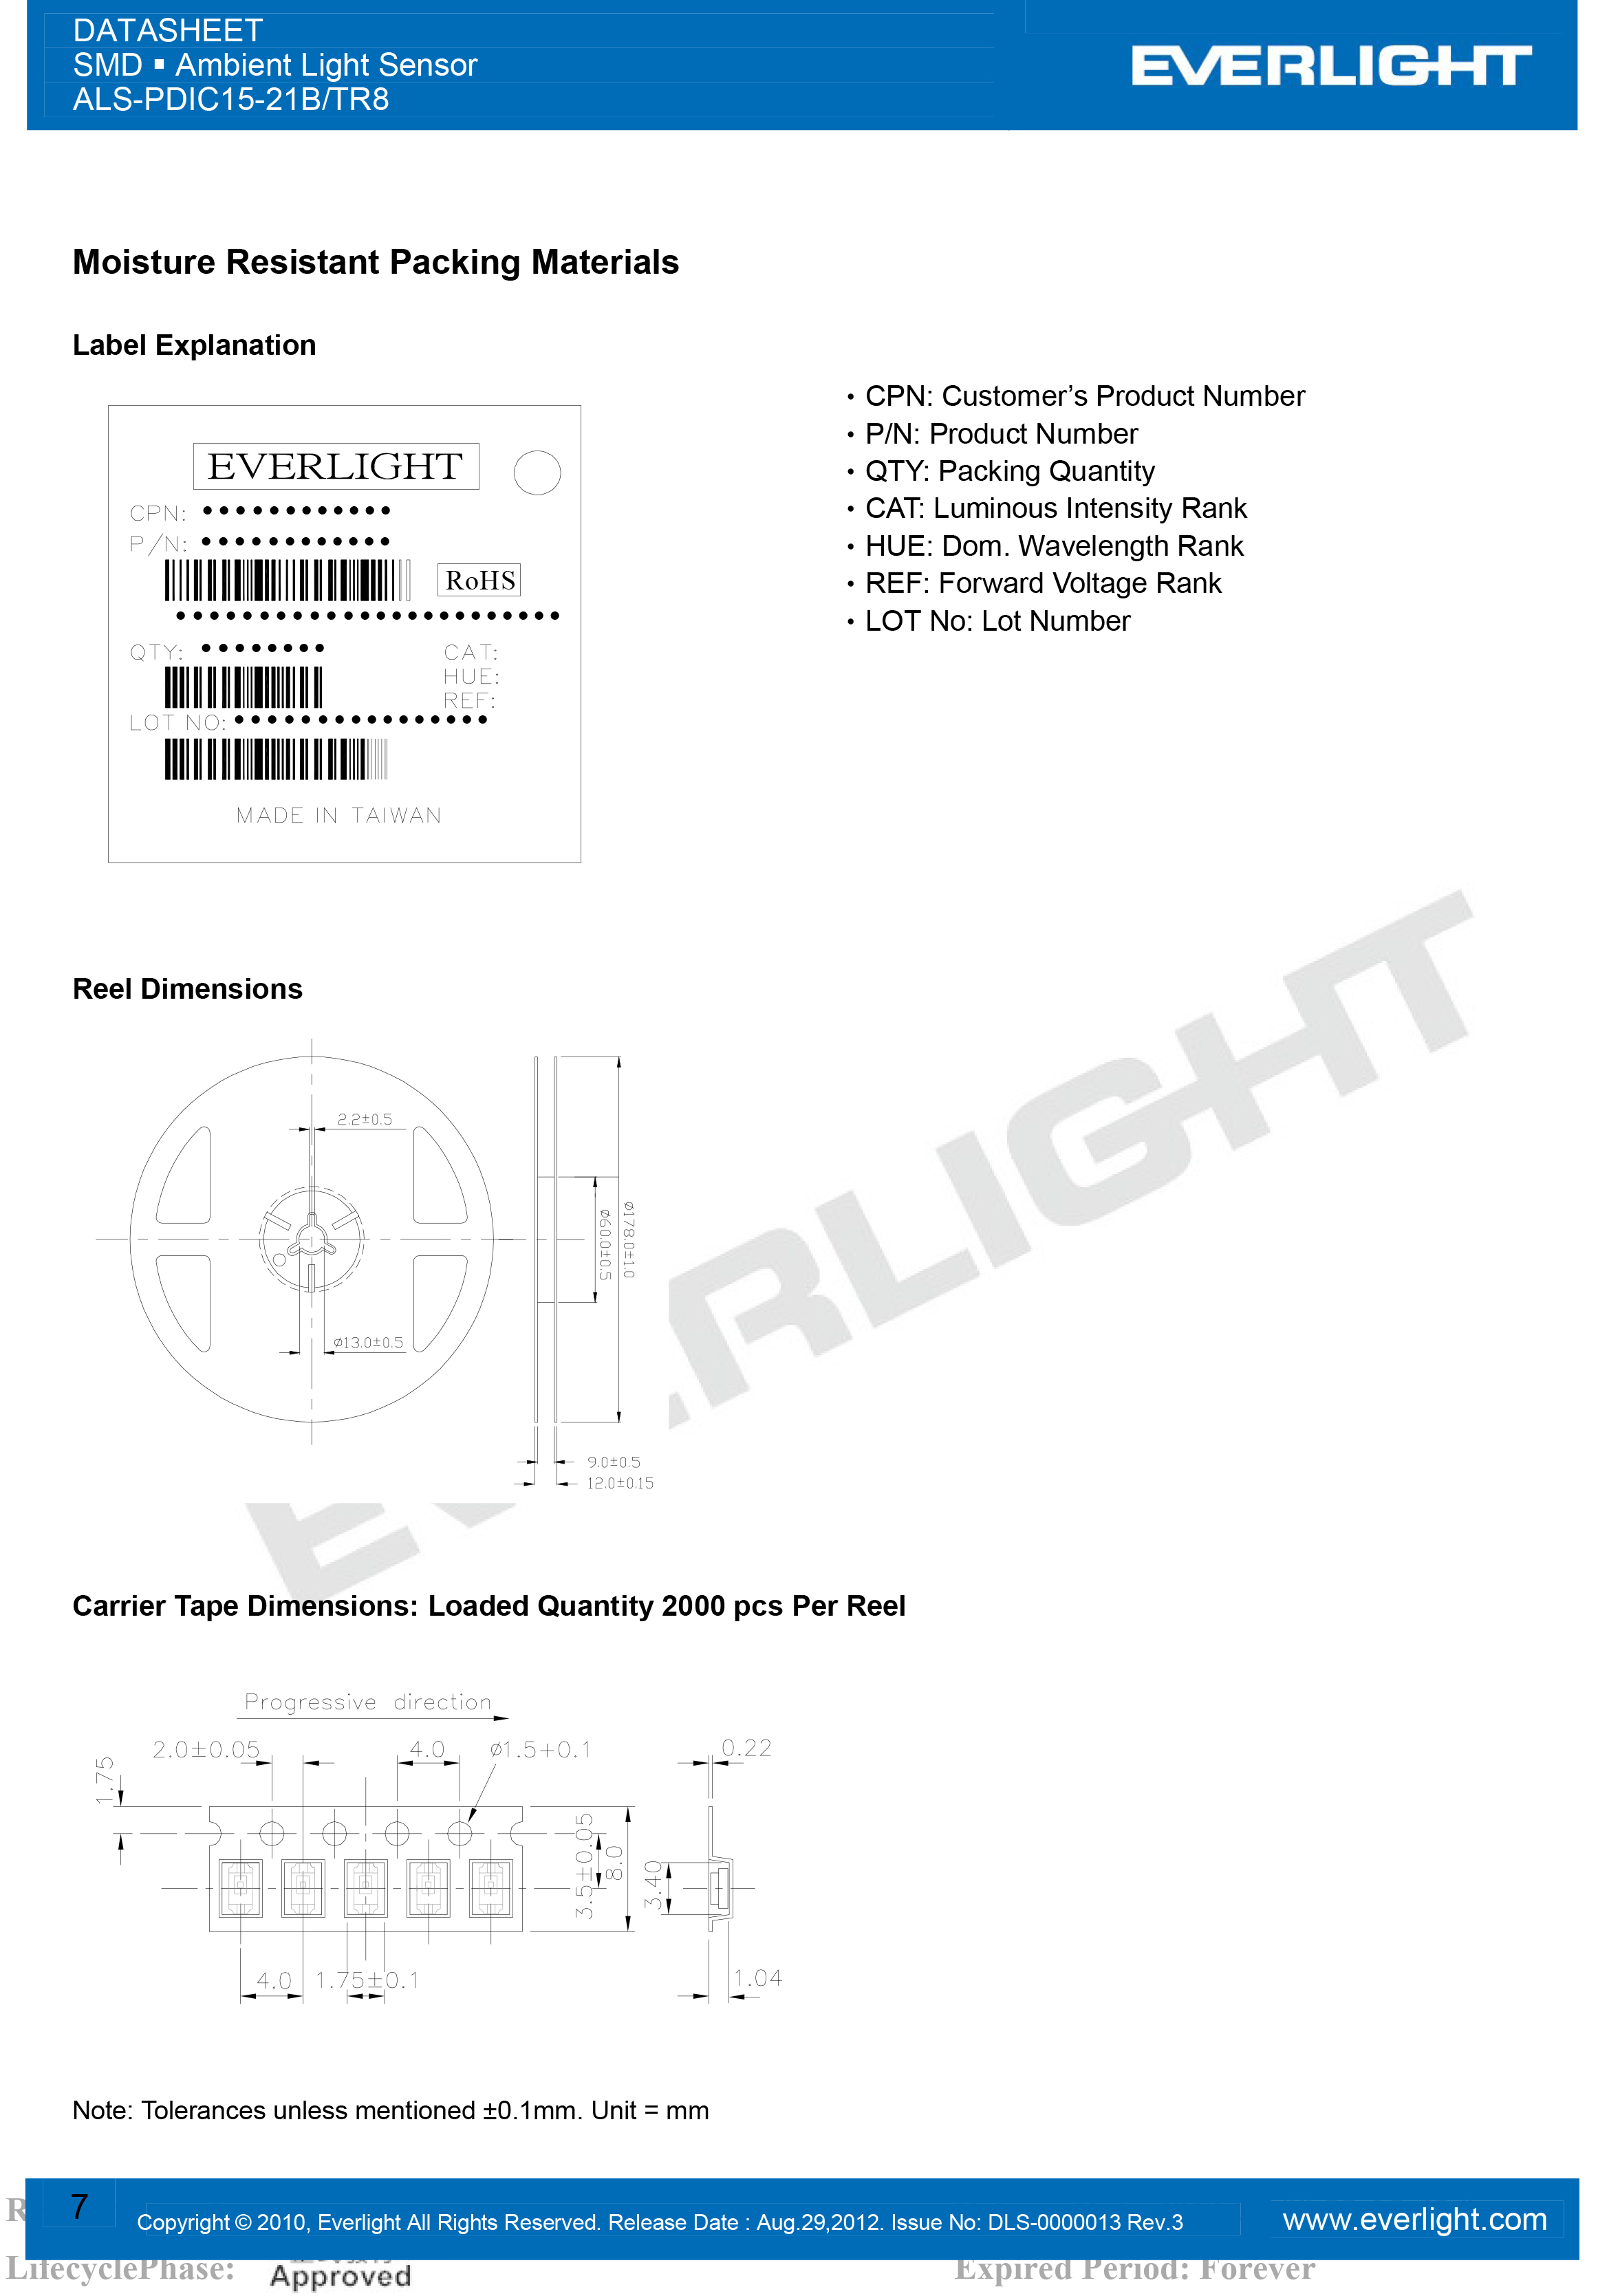 EVERLIGHT SMD 1206 AMBIENT LIGHT SENSOR ALS-PDIC15-21B-TR8 Datasheet